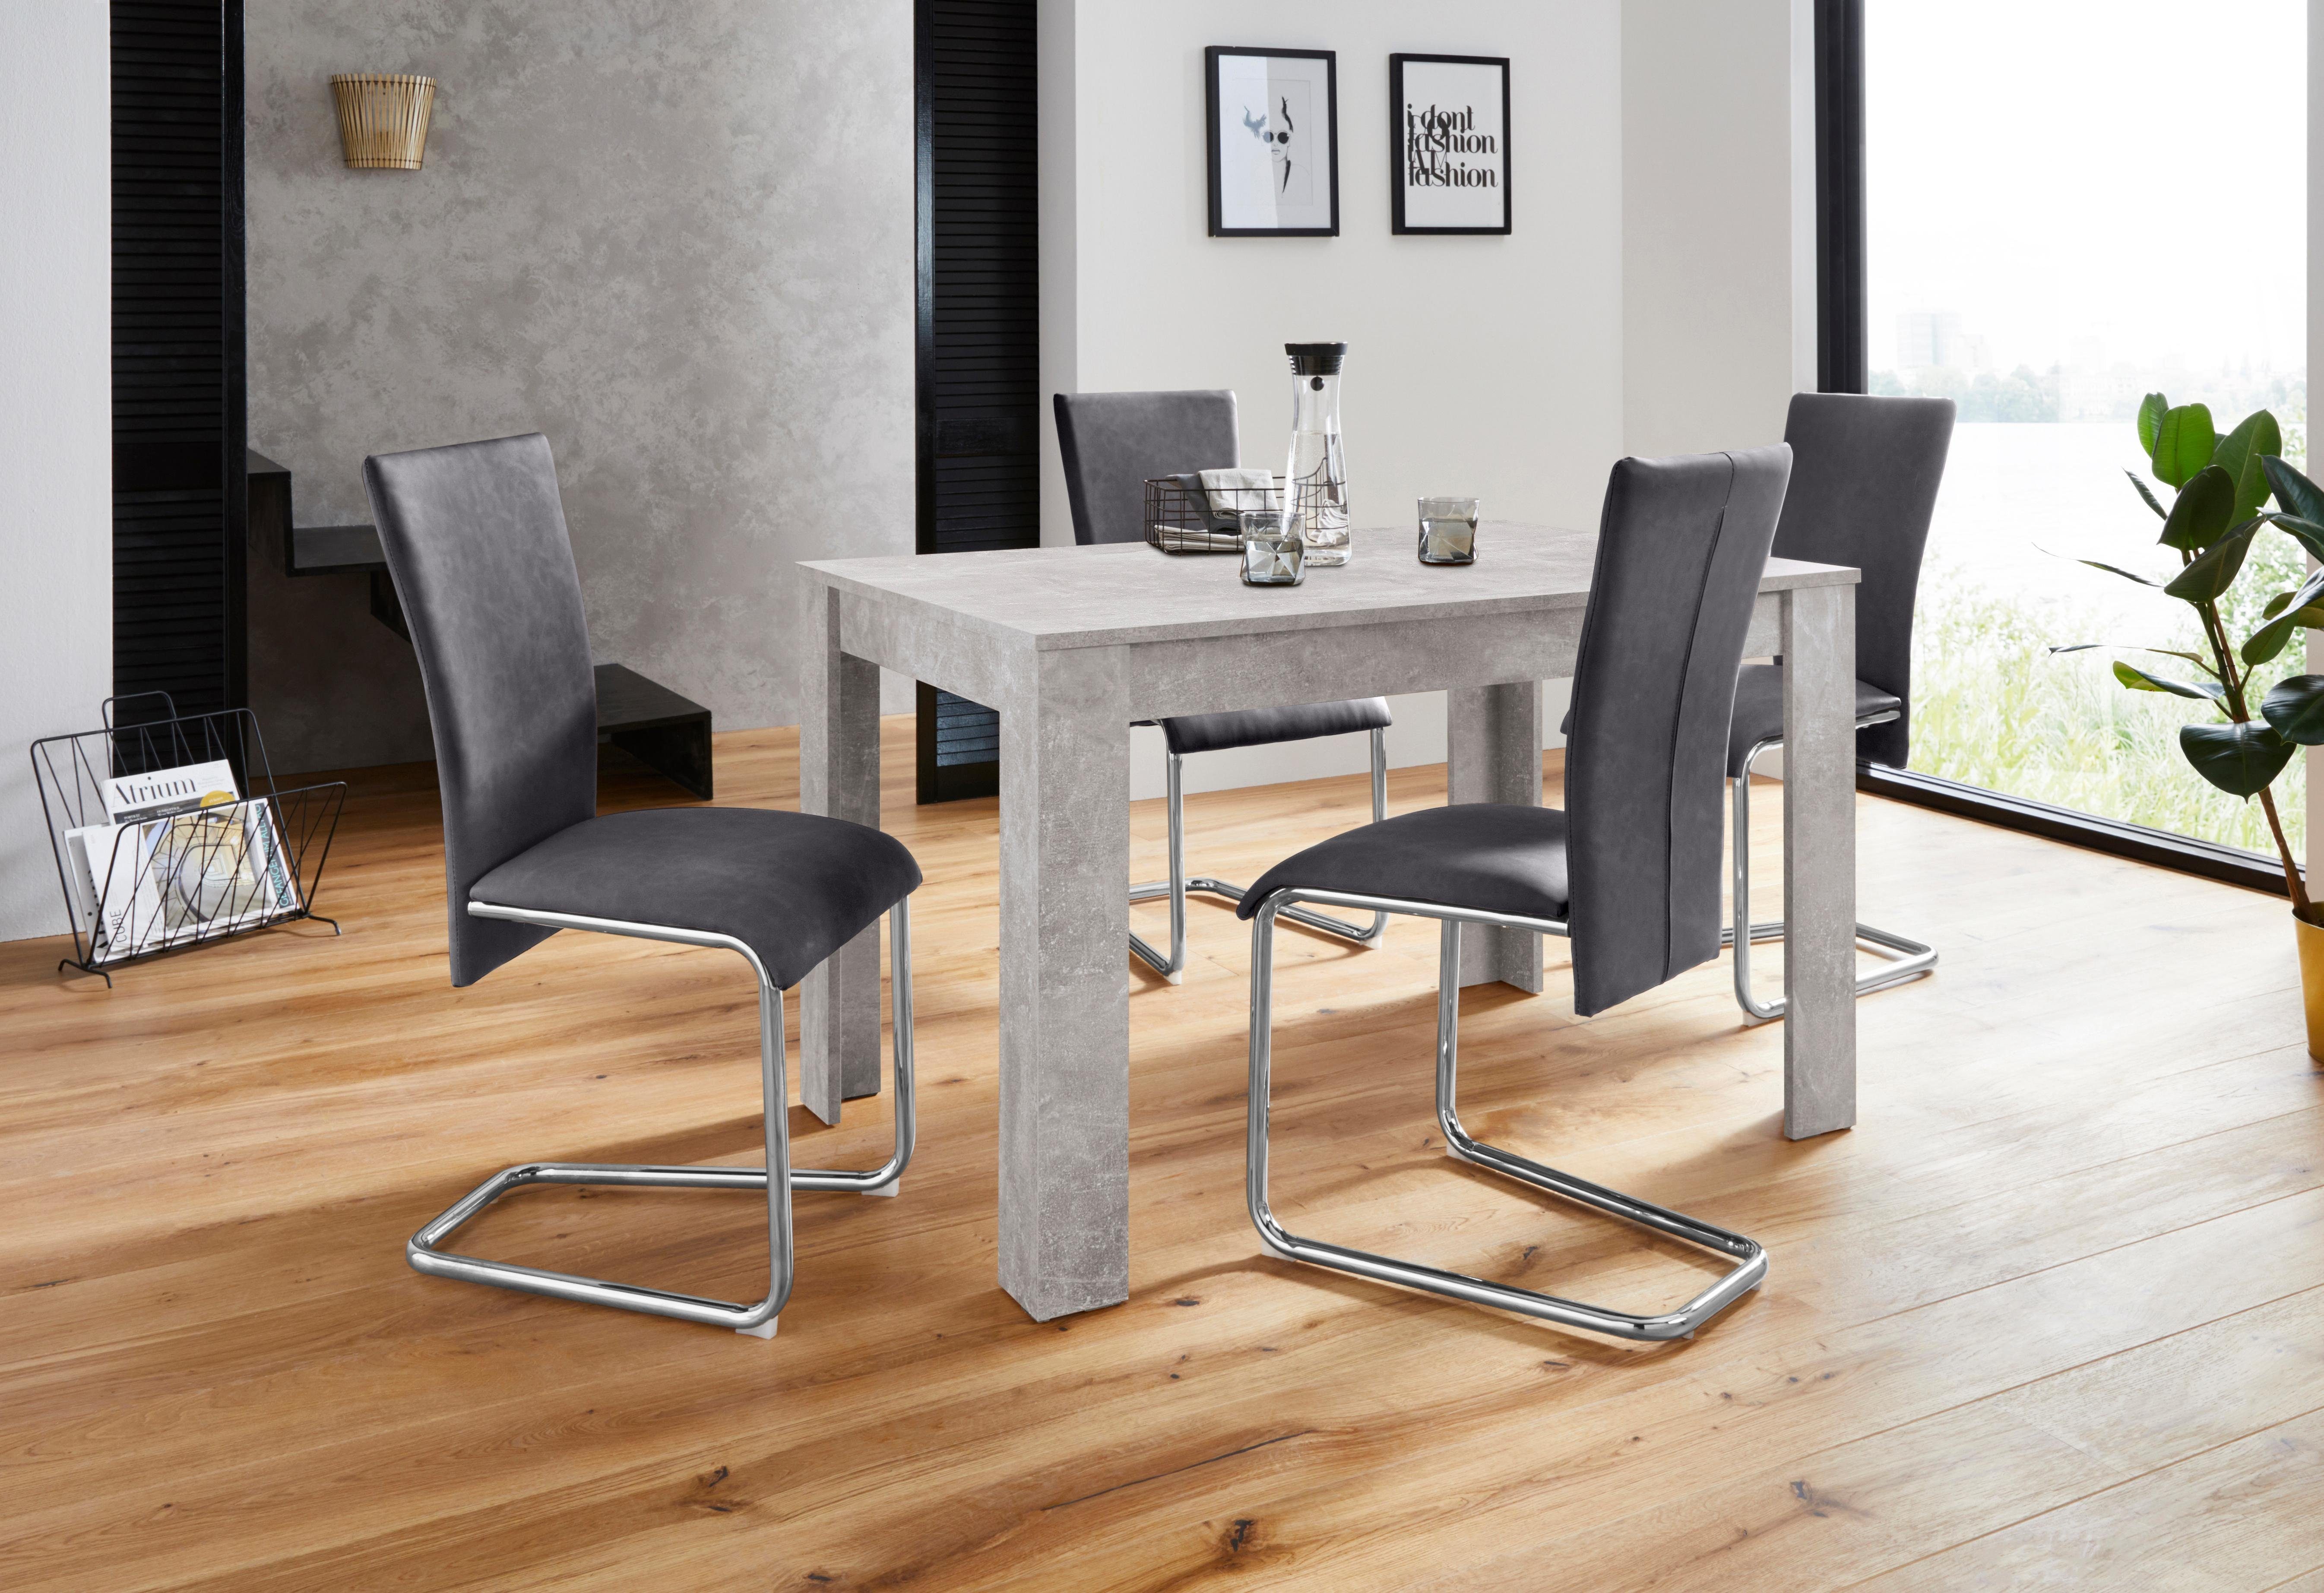 Homexperts Eethoek Nick2-Mulan met 4 stoelen, tafel in beton-look, breedte 120 cm (set, 5-delig)